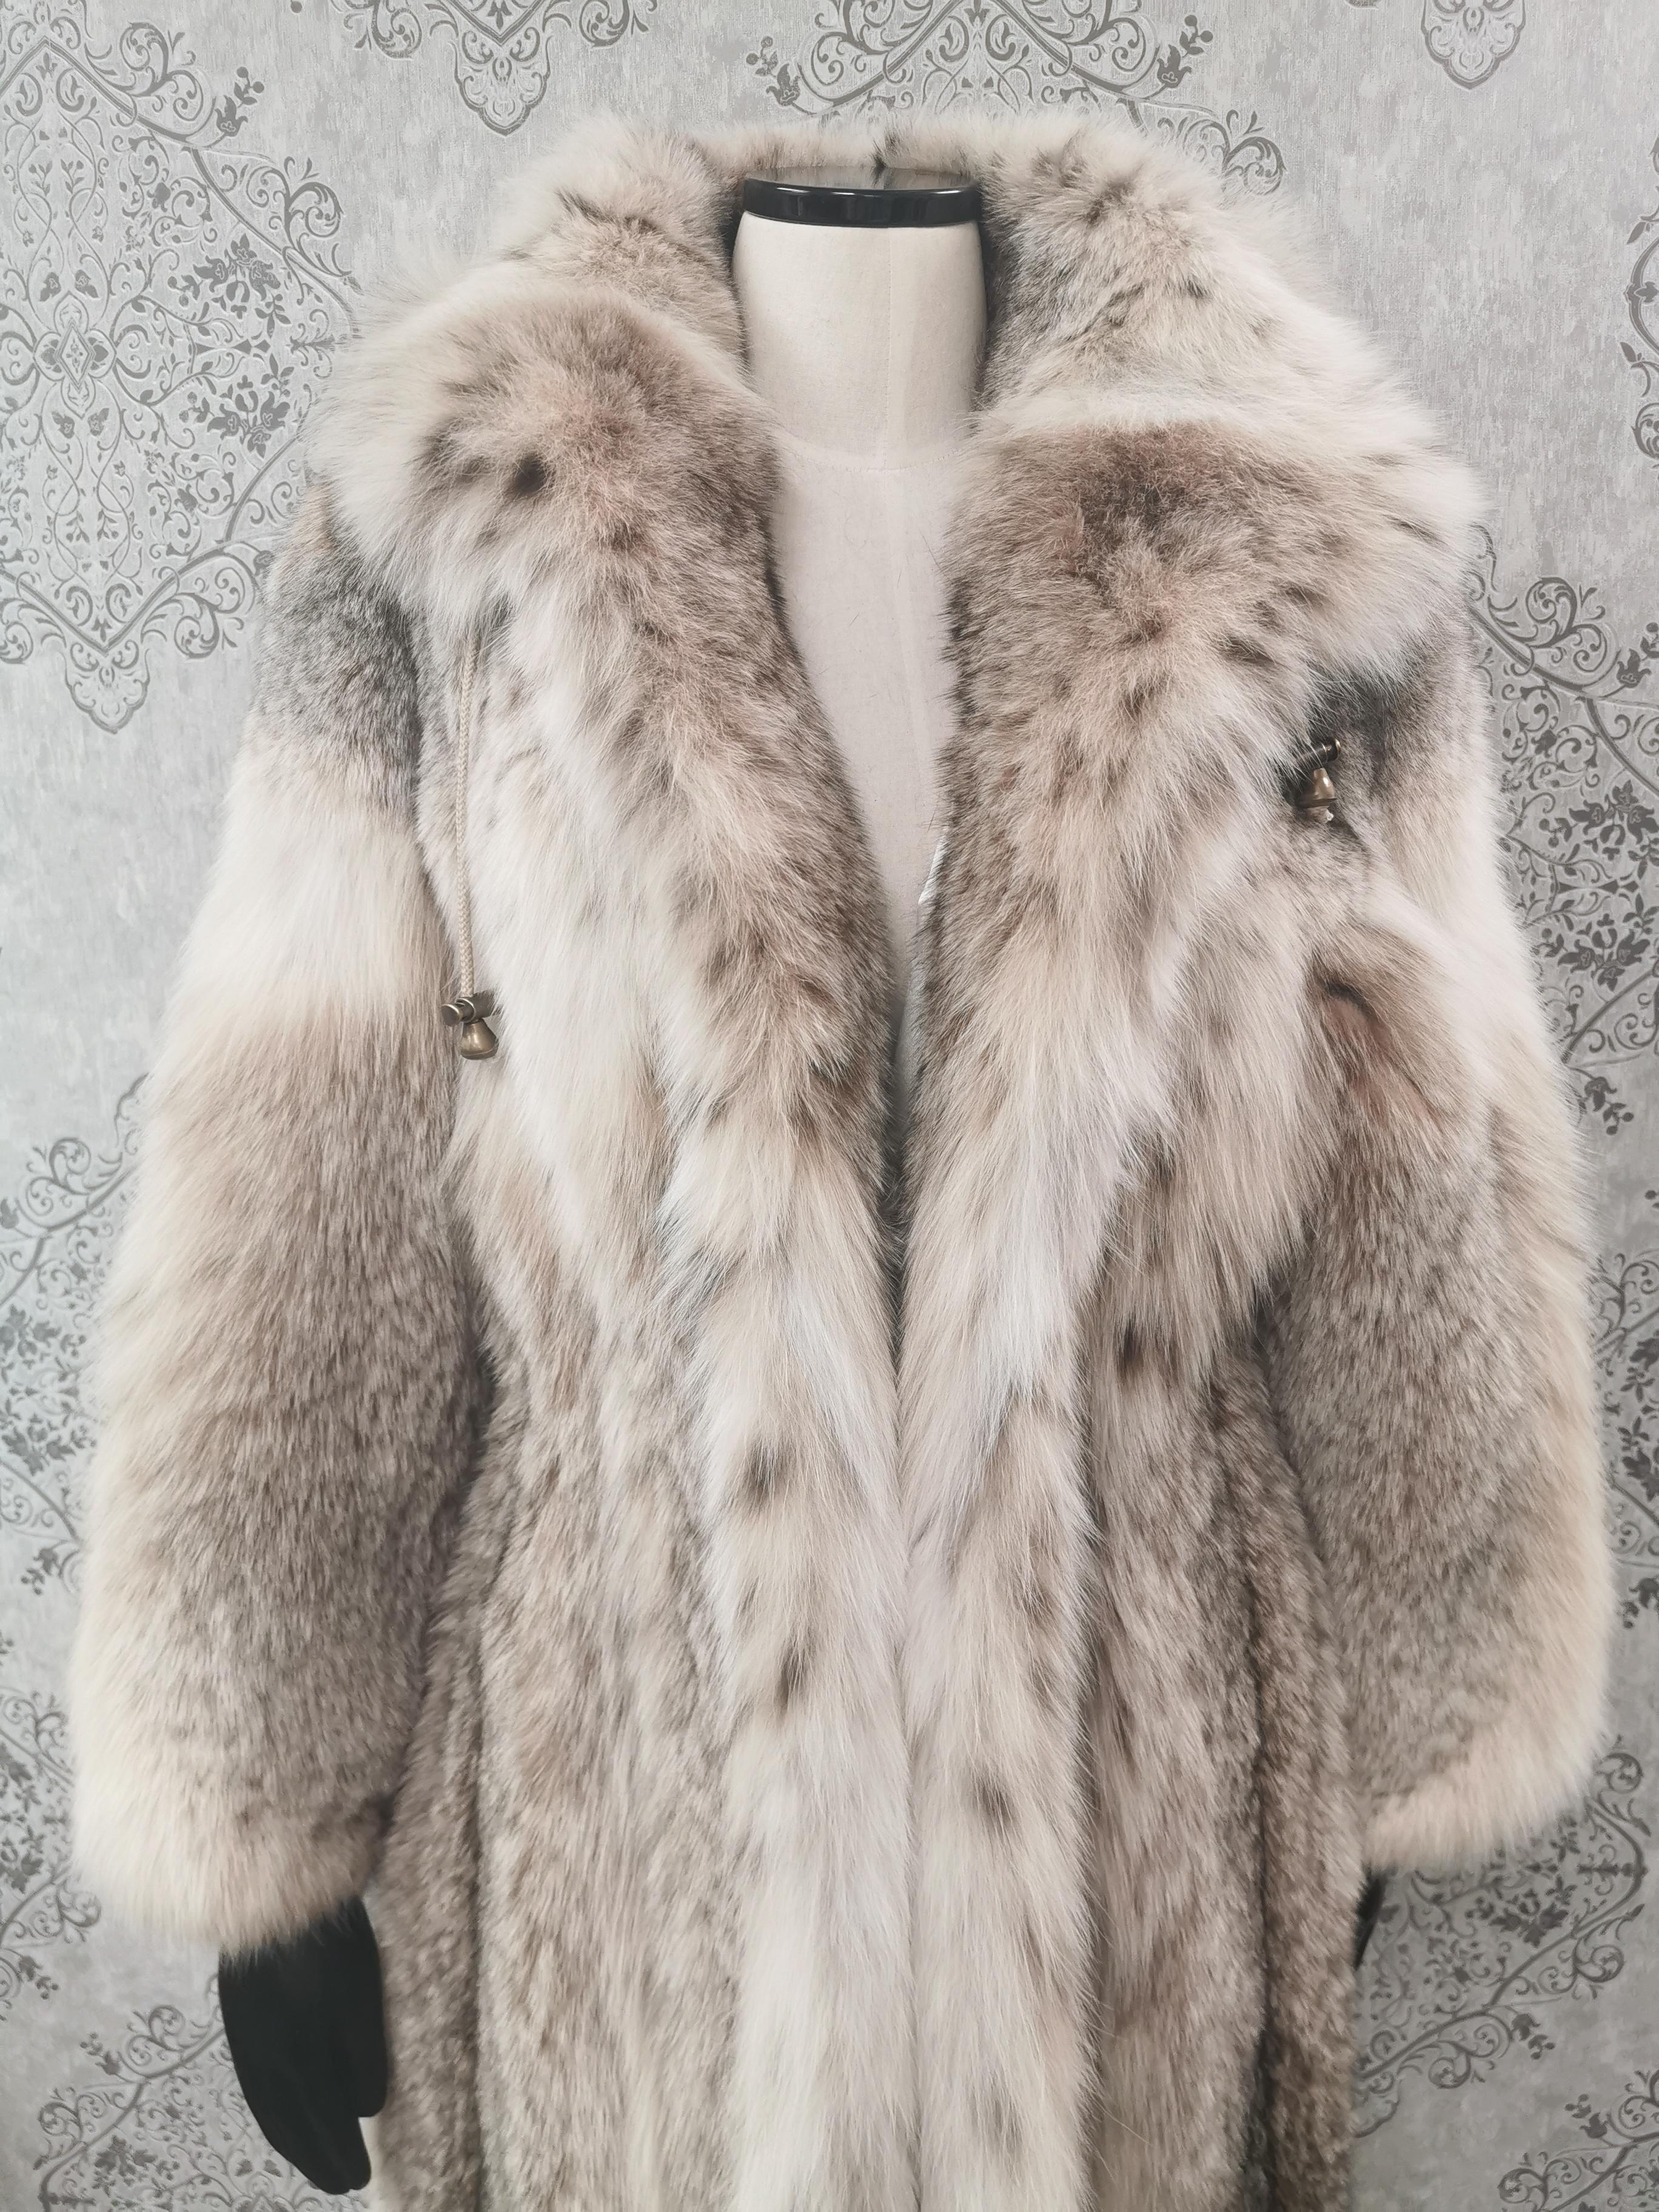 DESCRIPTION : Brand new lynx fur coat with detachable hood size 24 XXL

Tailored collar, straight sleeves, integraded belt, detachable hood, supple skins, beautiful fresh fur, european german clasps for closure, too slit pockets, nice big full pelts